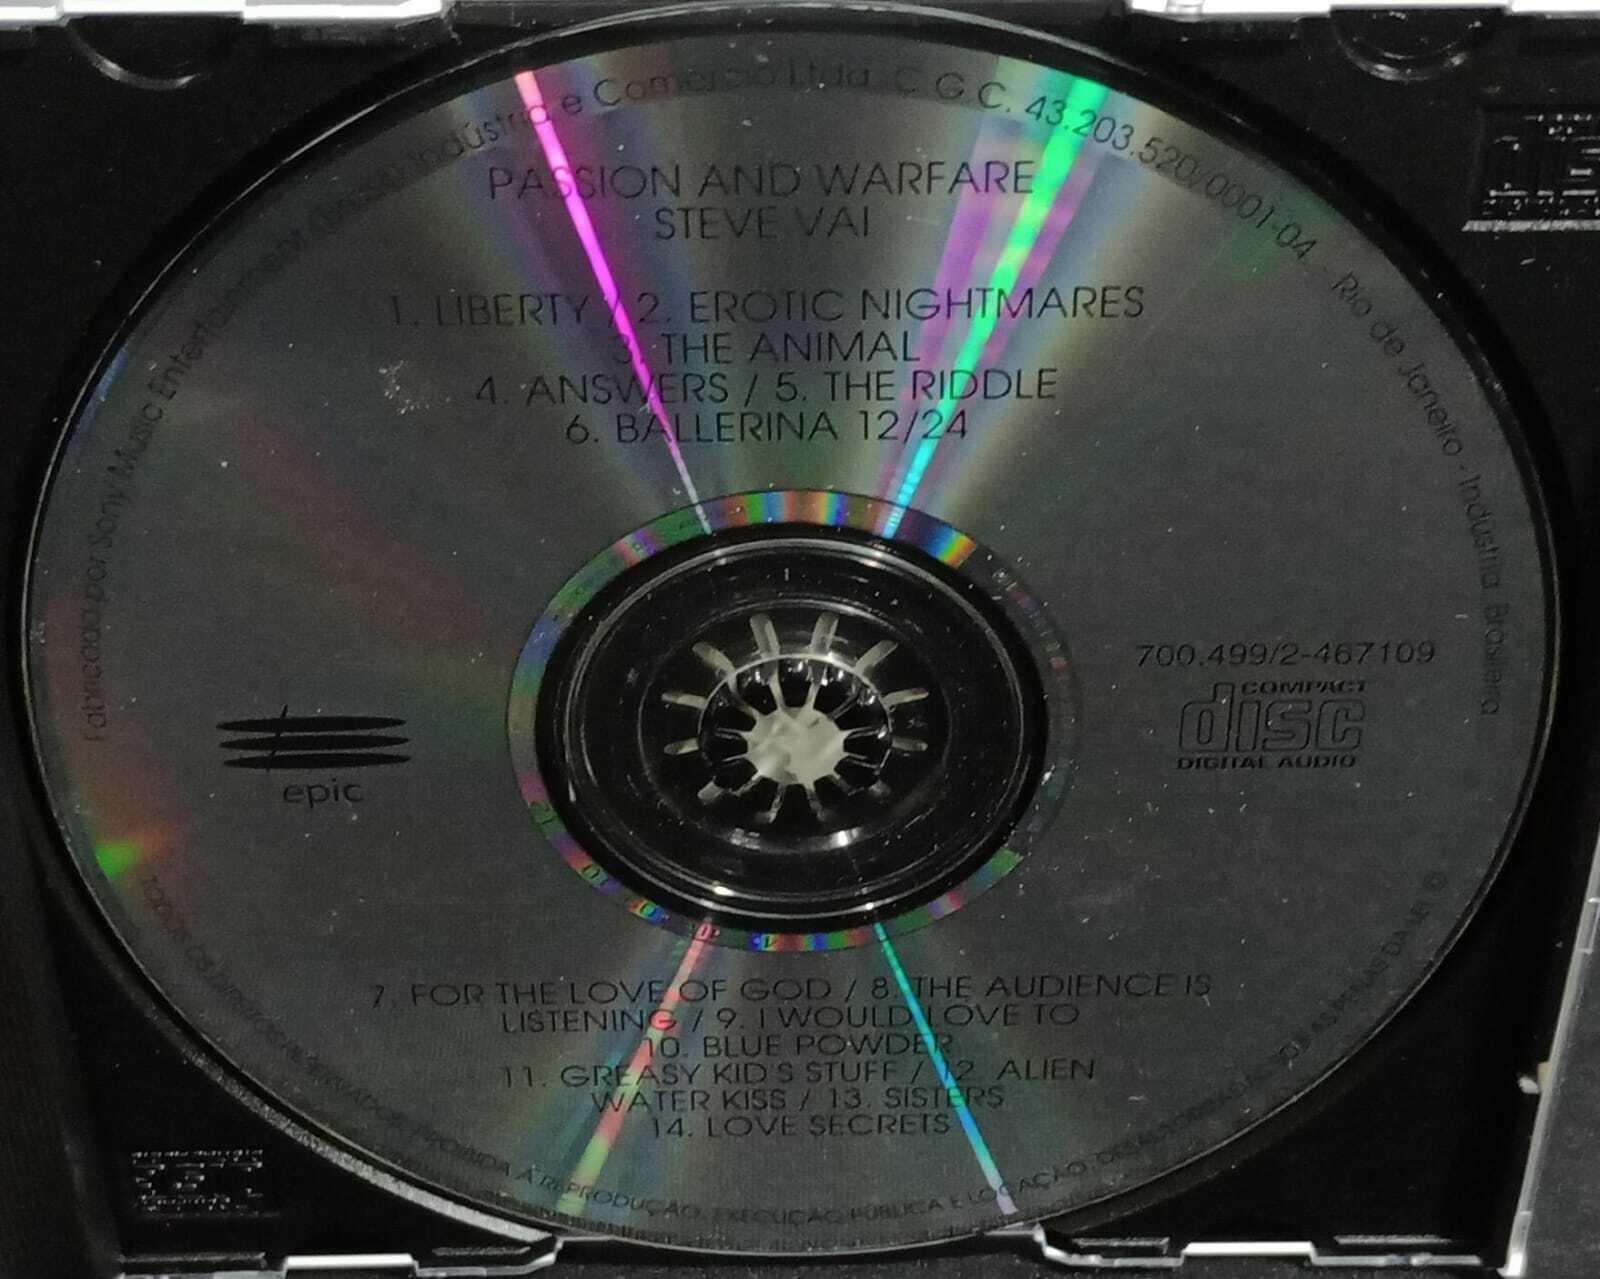 CD - Steve Vai - Passion and Warfare